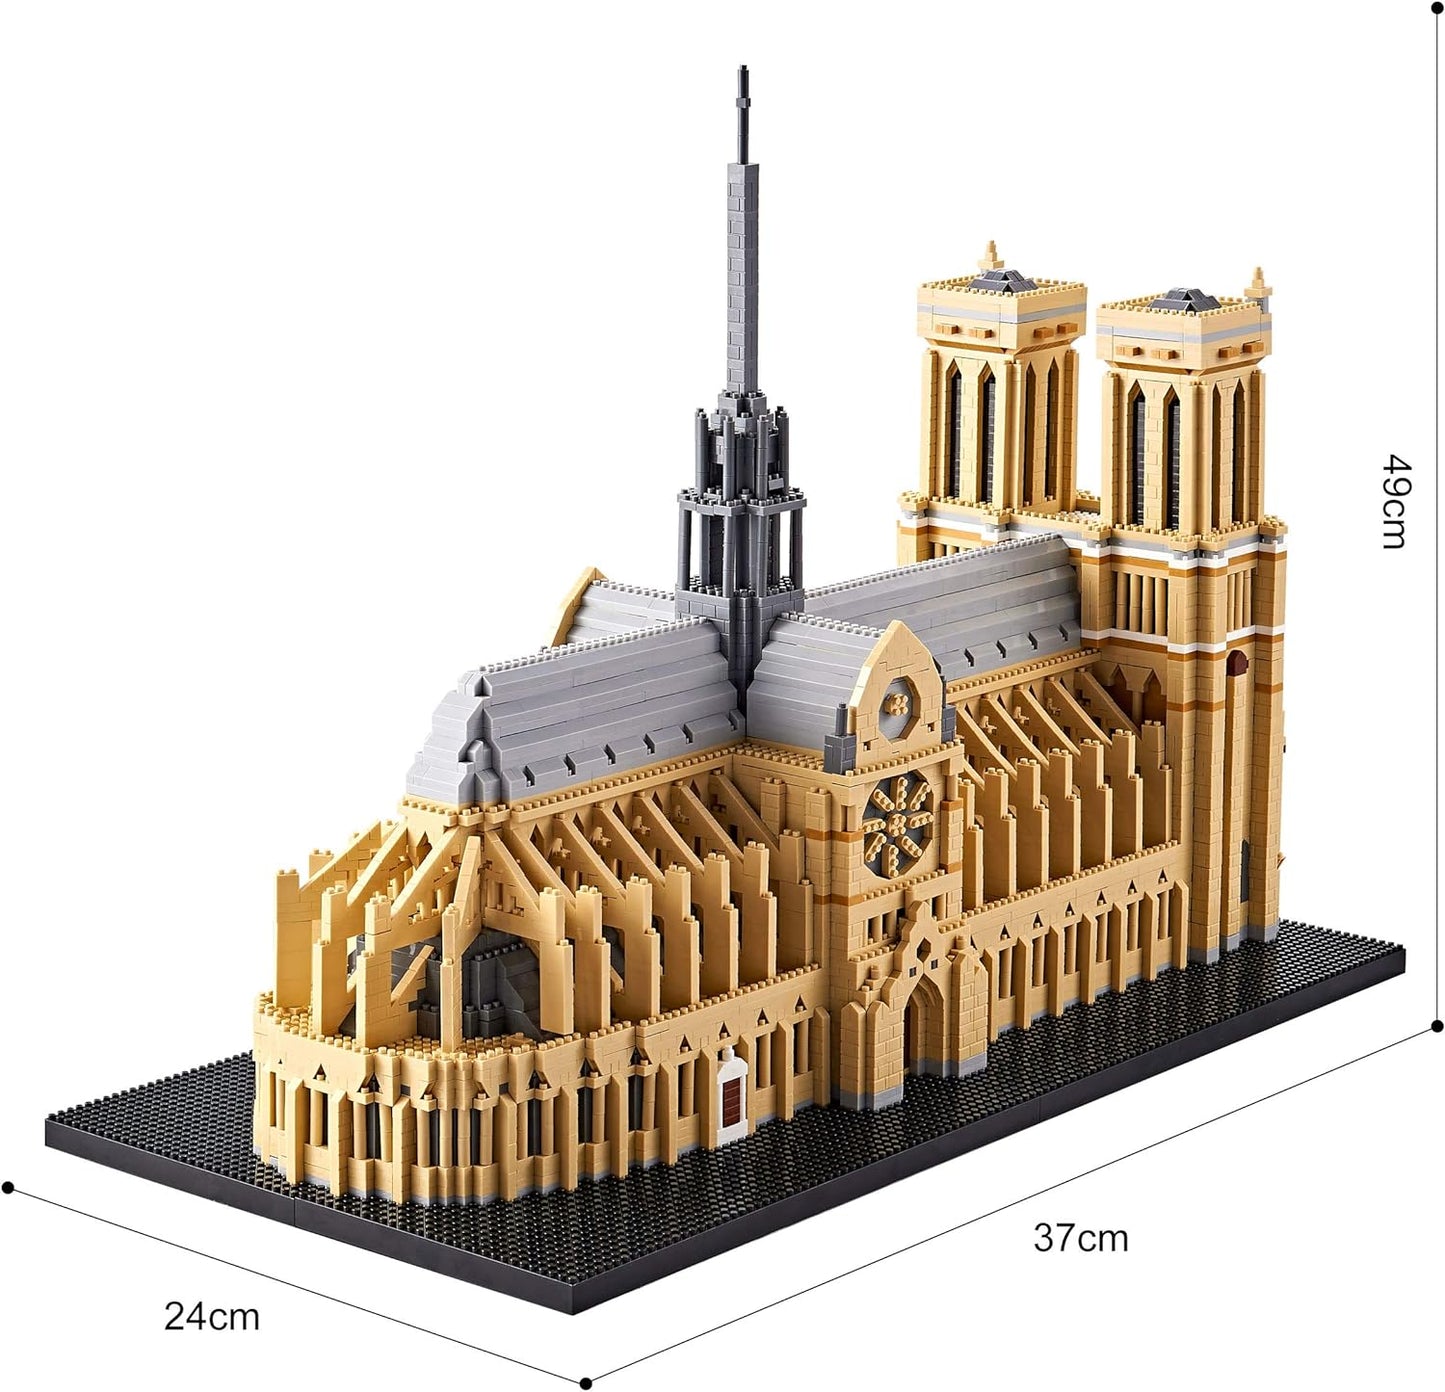 Architecture Sets for Adults French Notre Dame De Paris Collection Micro Blocks Famous Building Model Kits, Ideas DIY Mini Bricks Toy Gift for Kids (7380 Pieces)